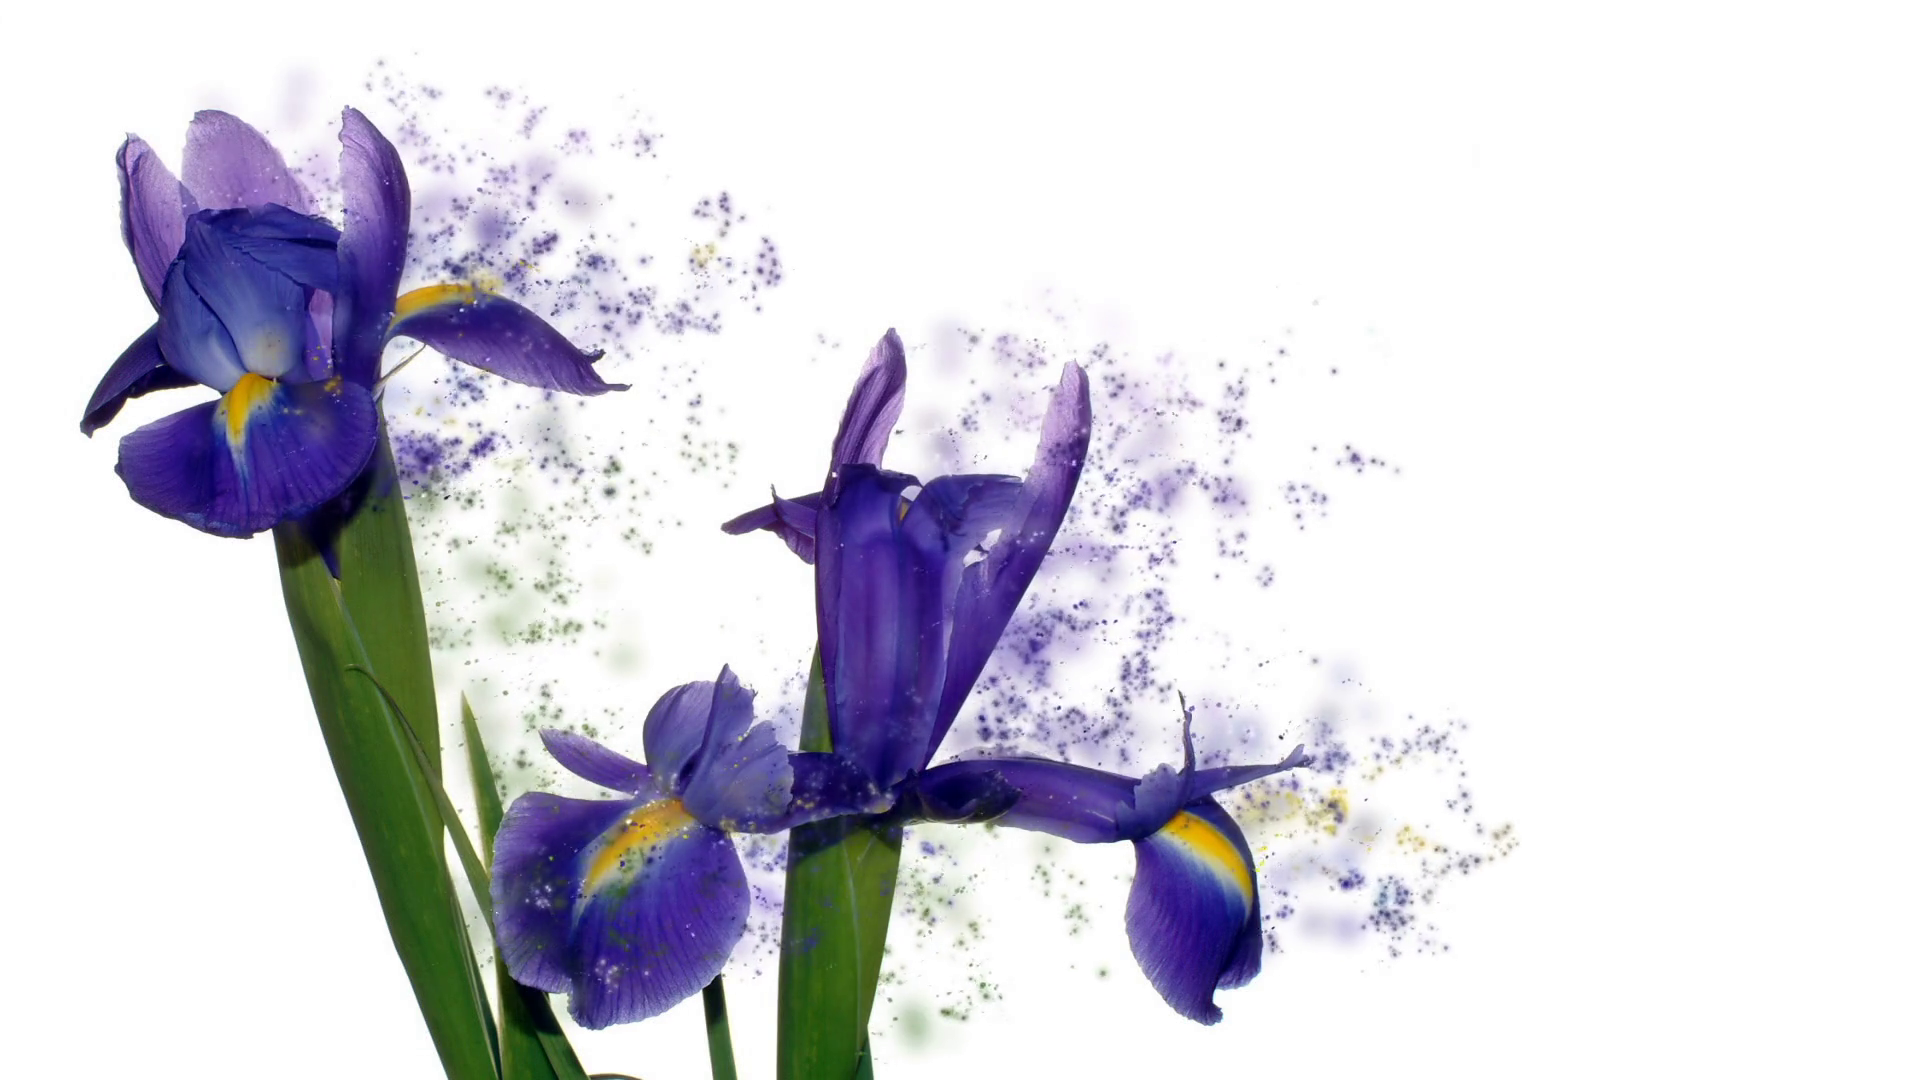 Iris Flower PNG HD - 138986